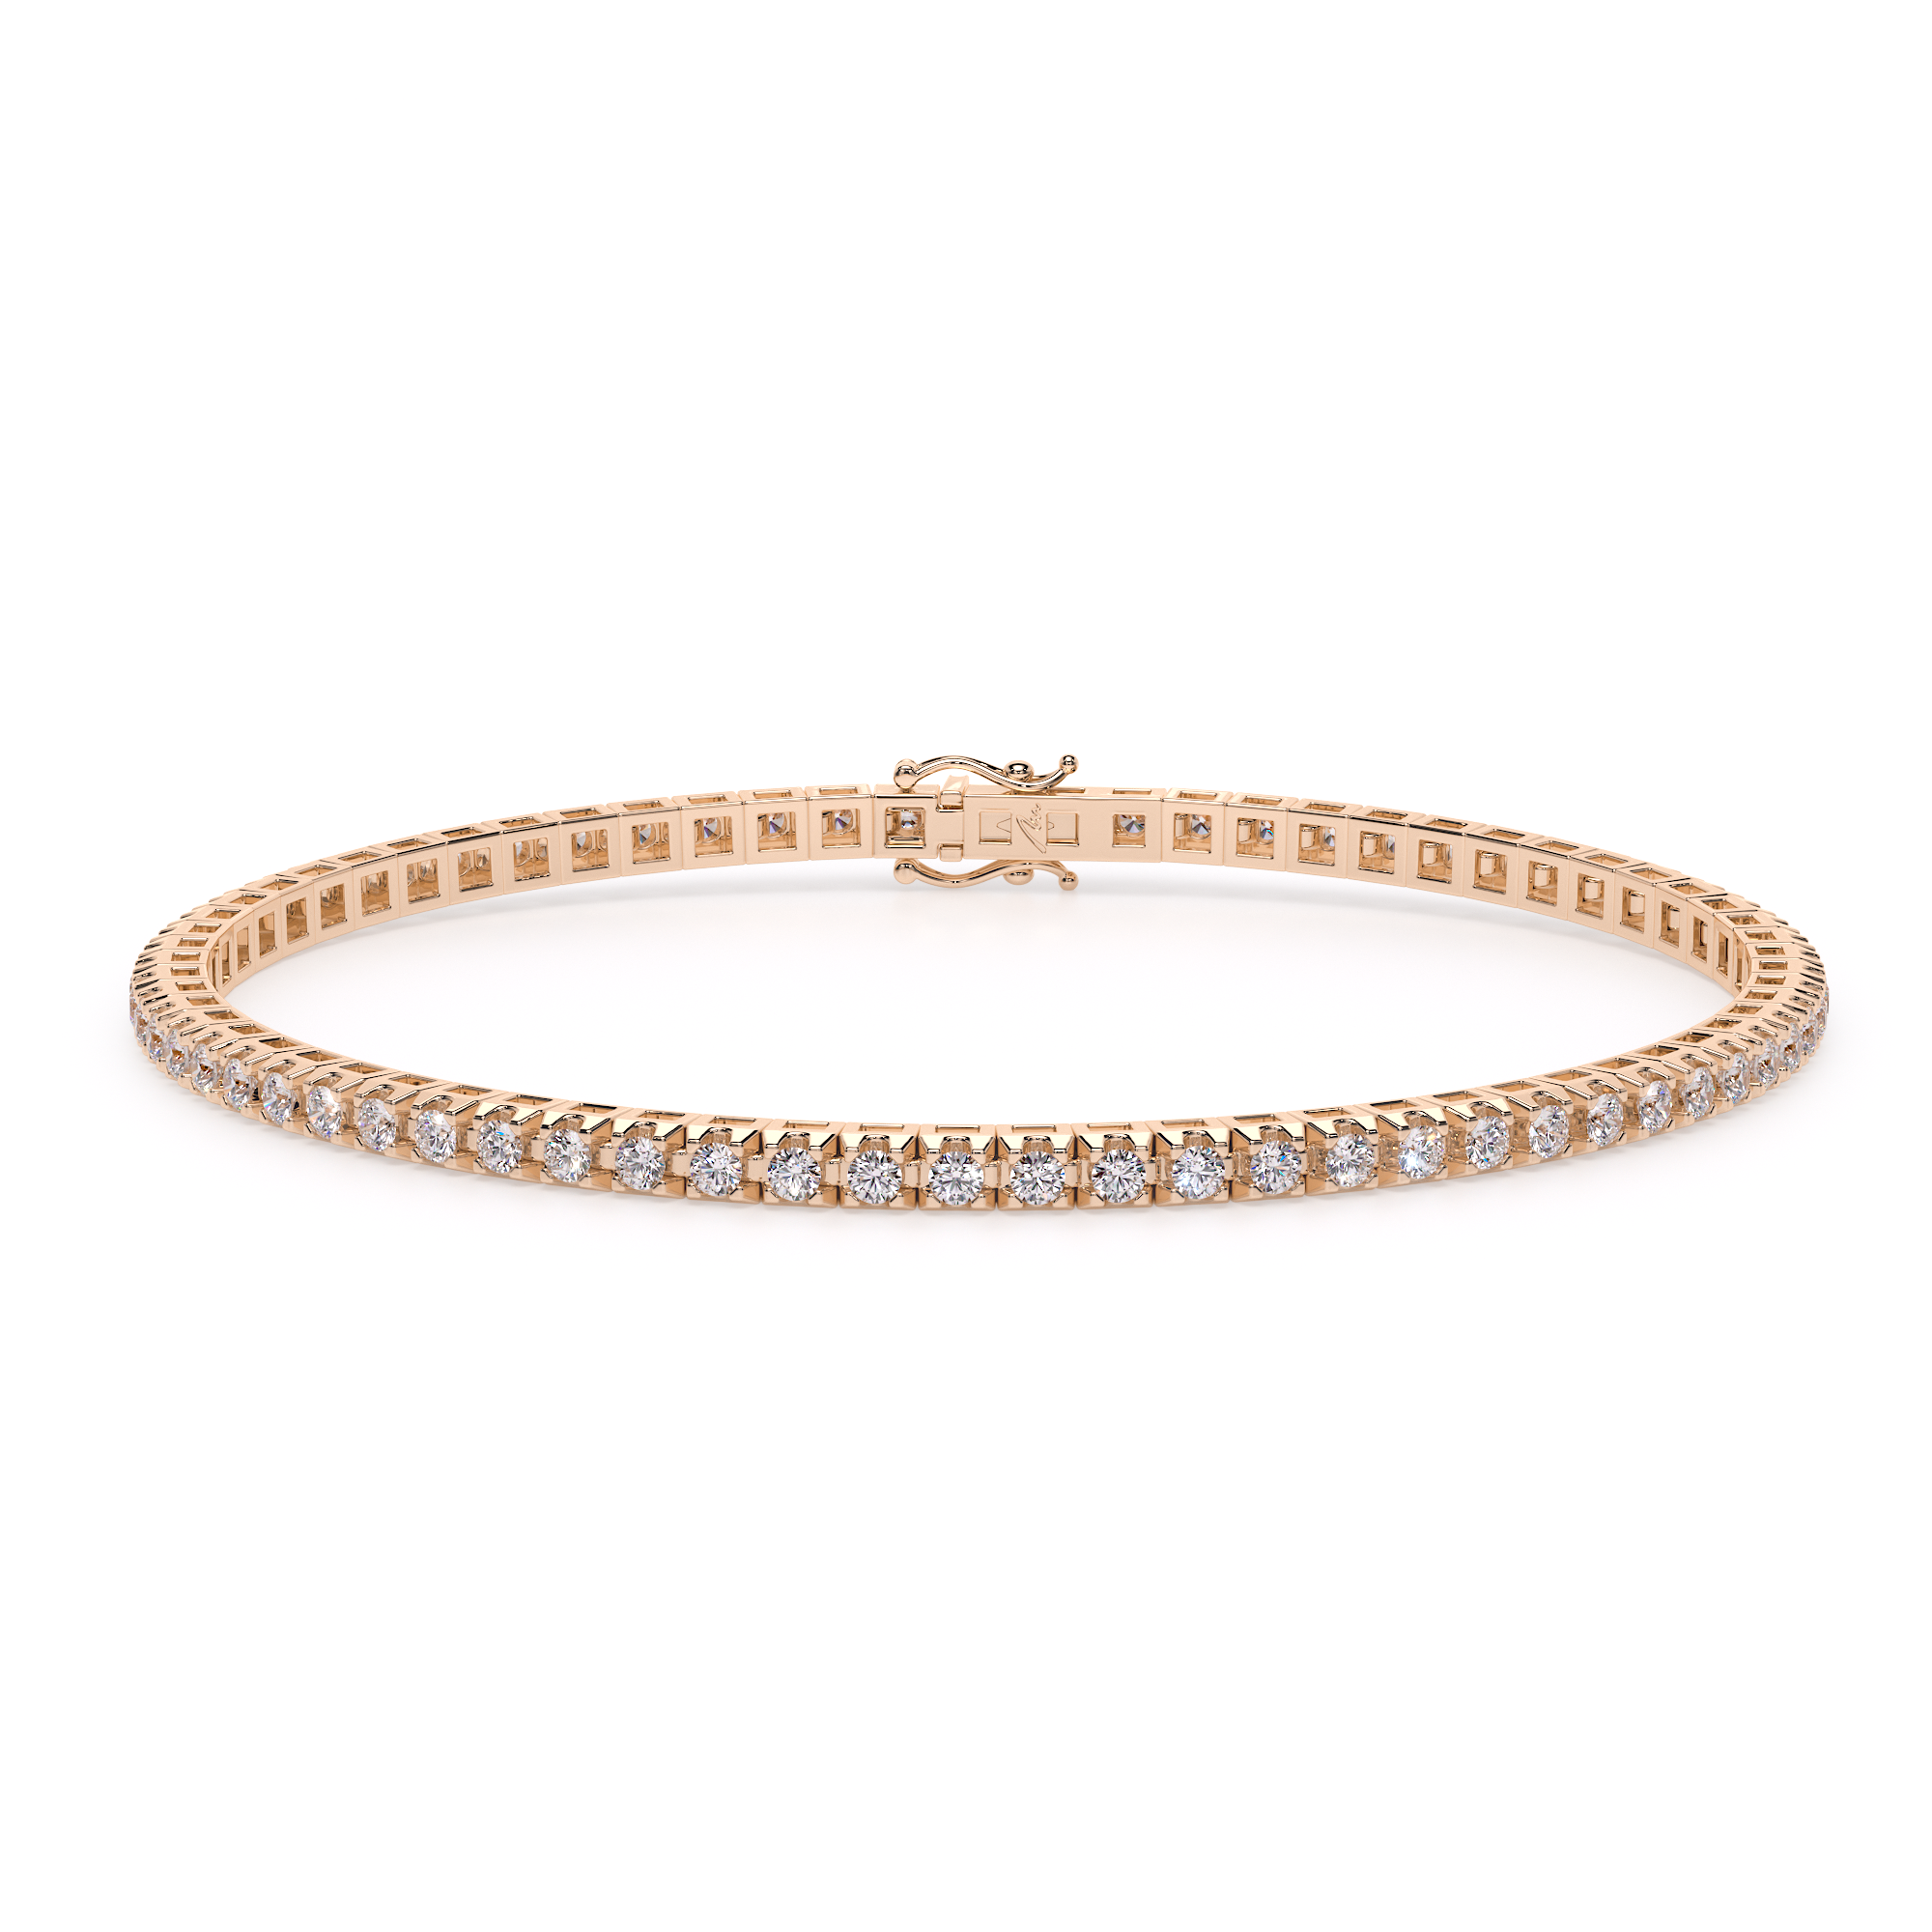 18 k rose gold Tennis Bracelet, with 3.50 CT diamonds